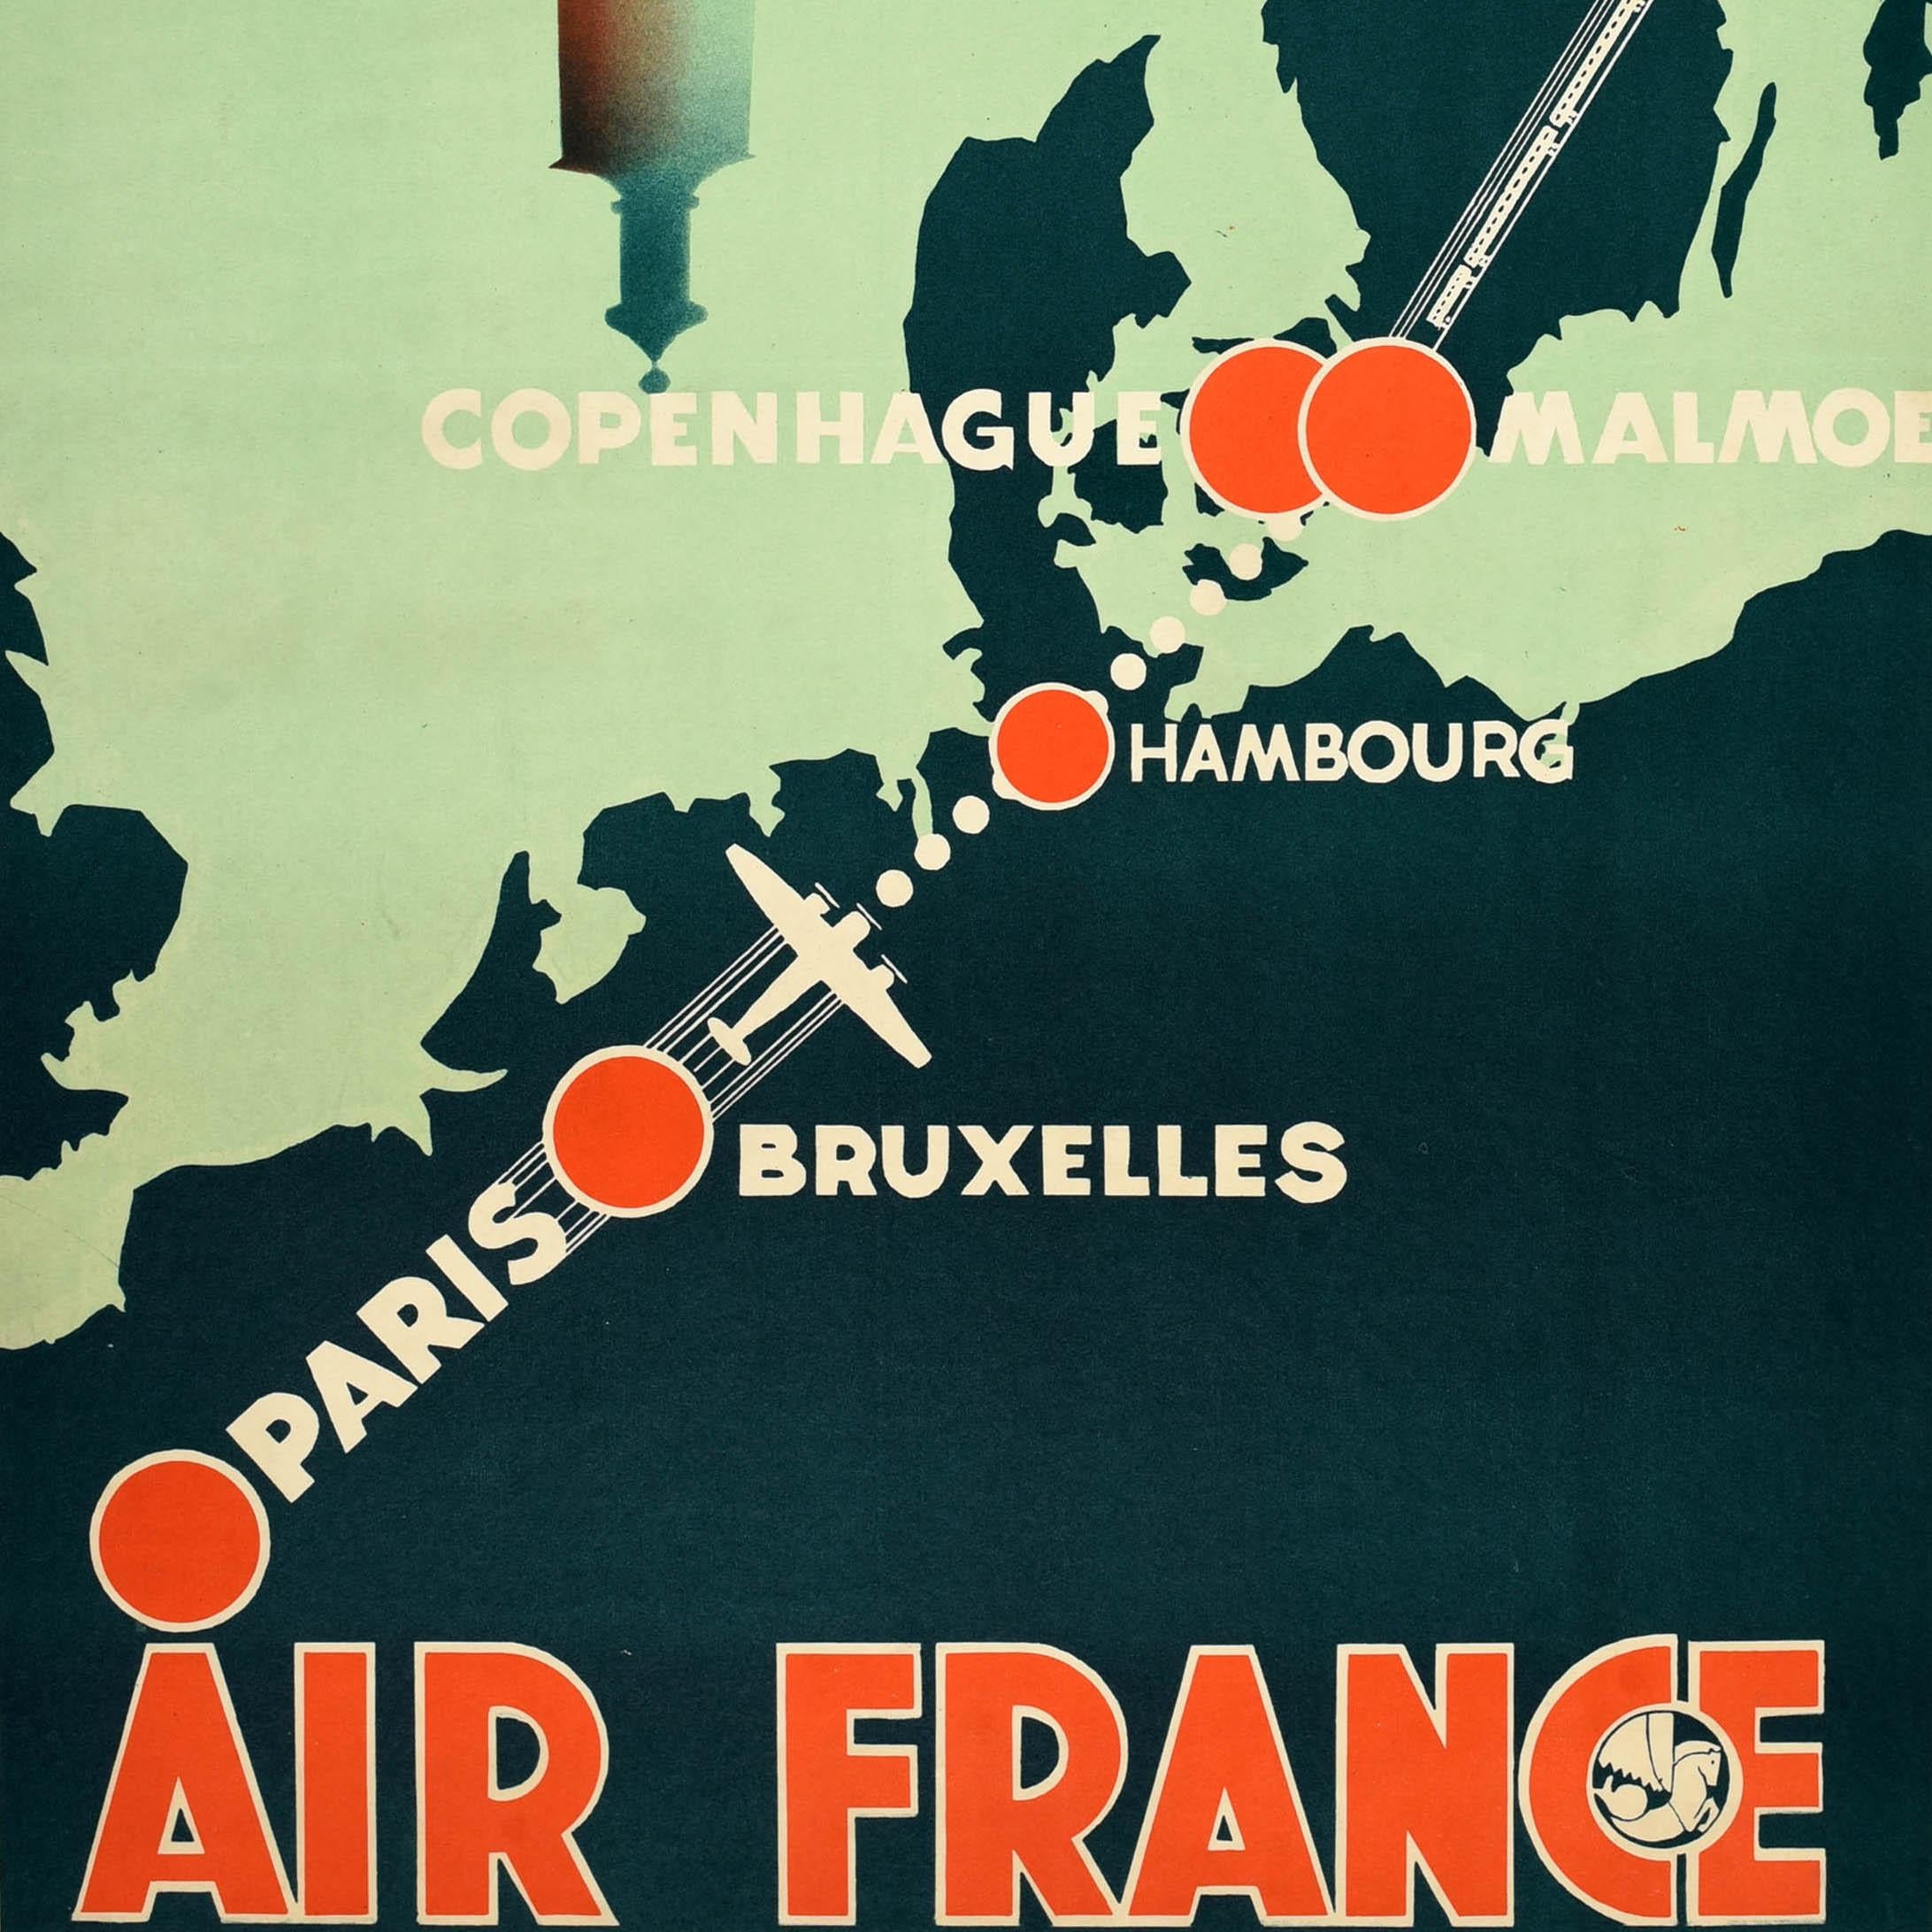 French Original Vintage Travel Poster Air France Stockholm Paris Art Deco Scandinavia For Sale